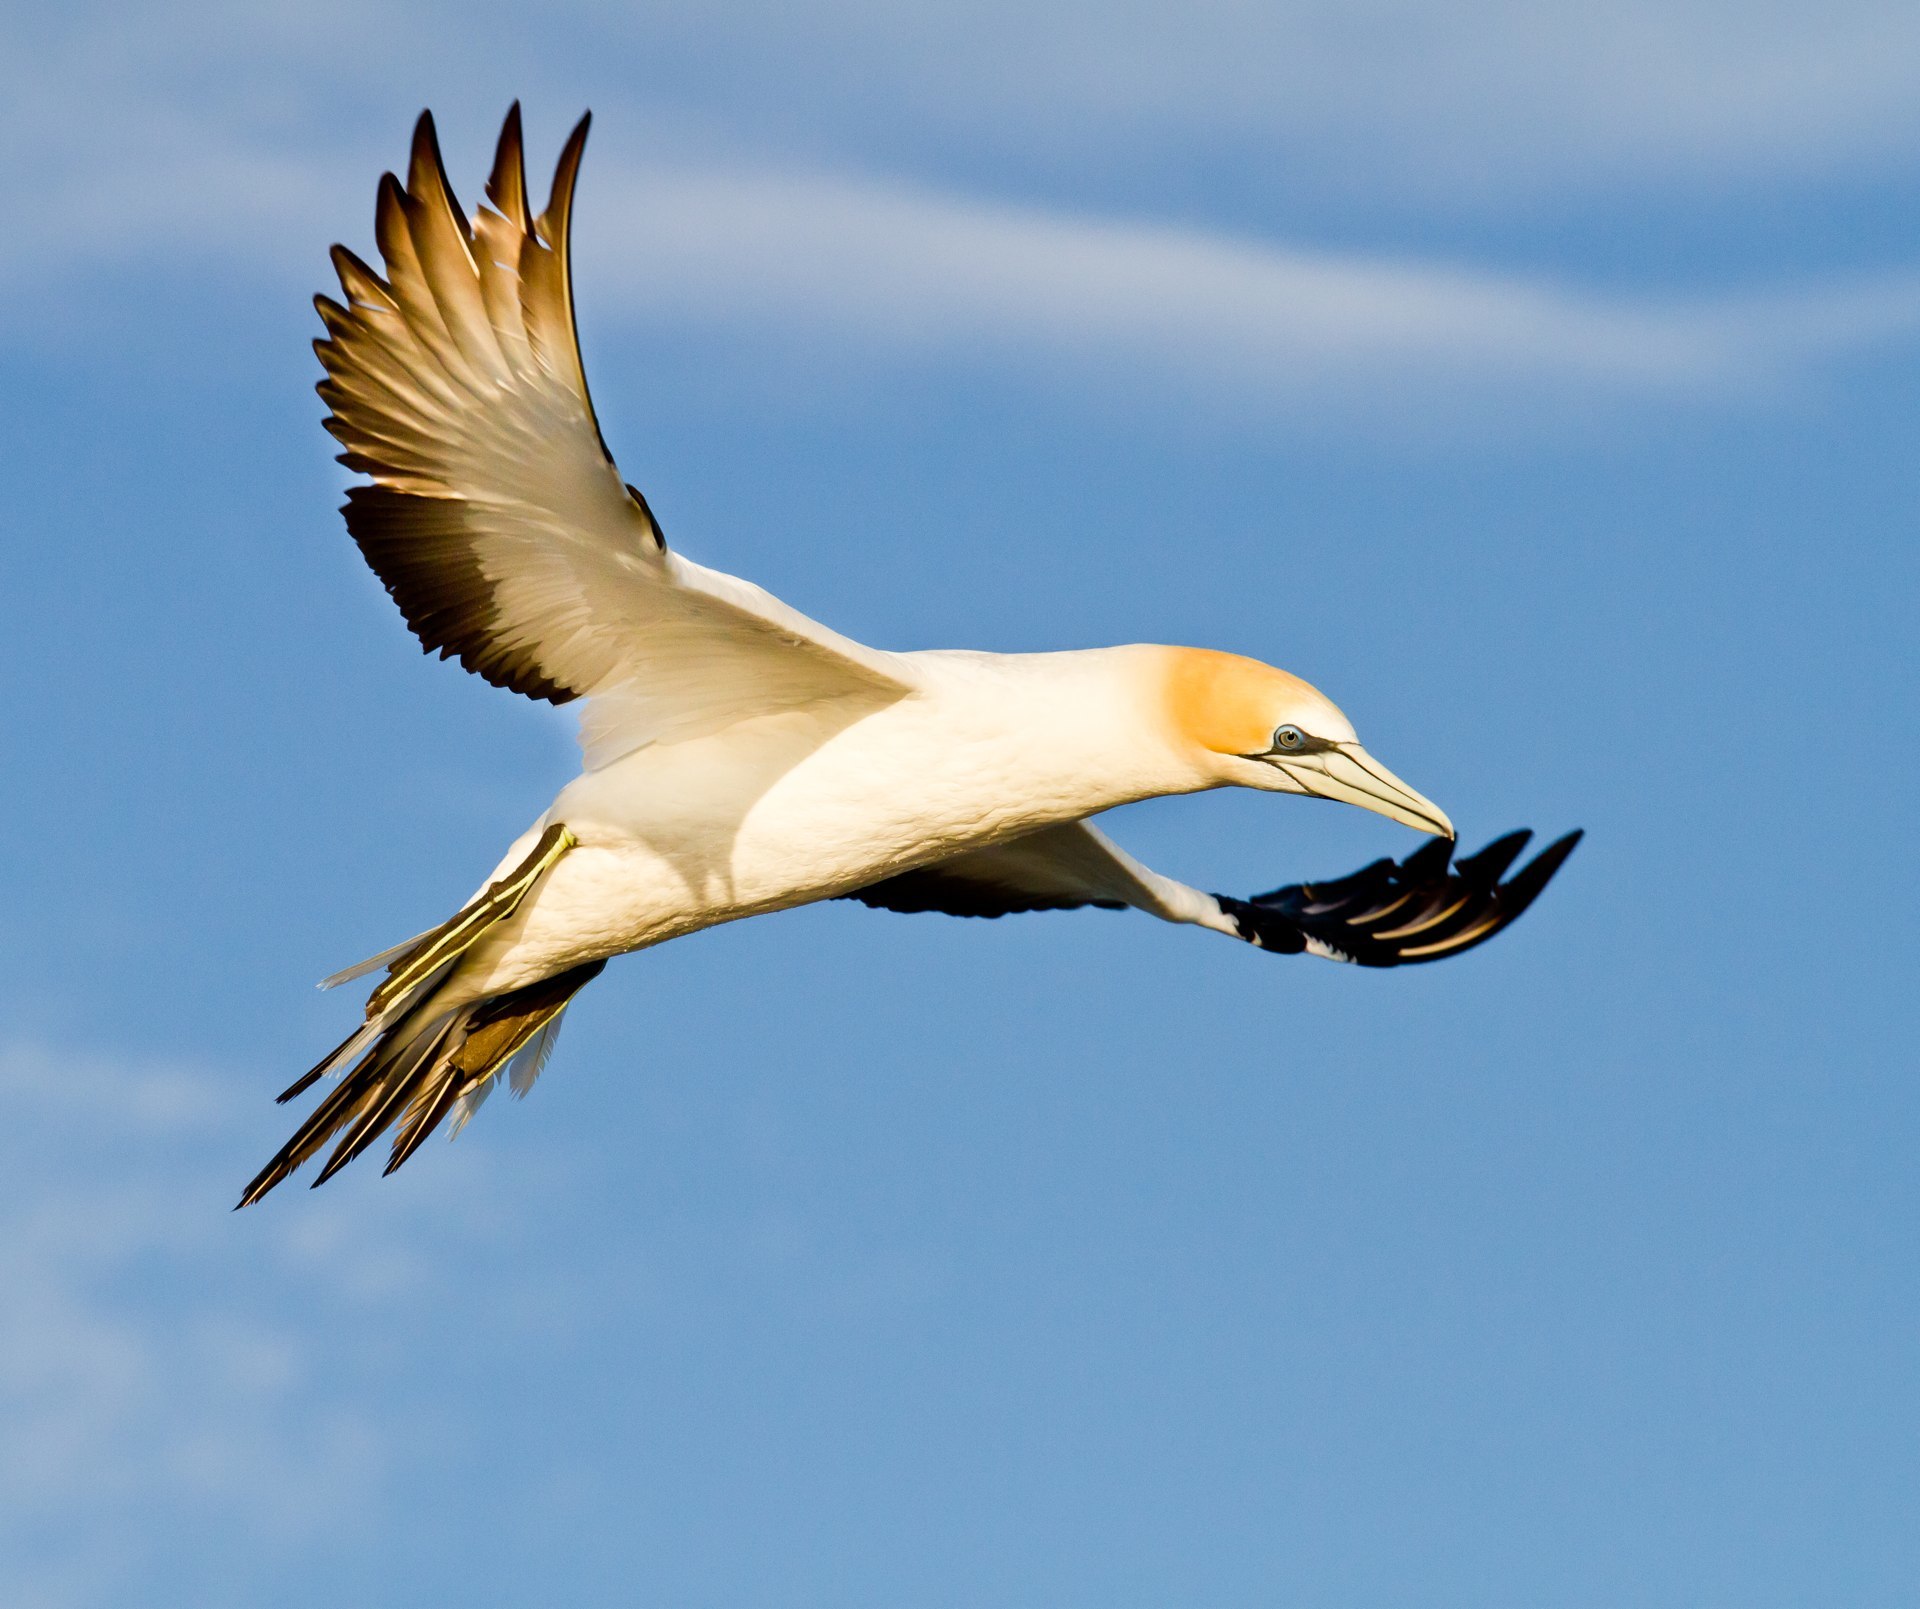 Pretty Australasian gannet